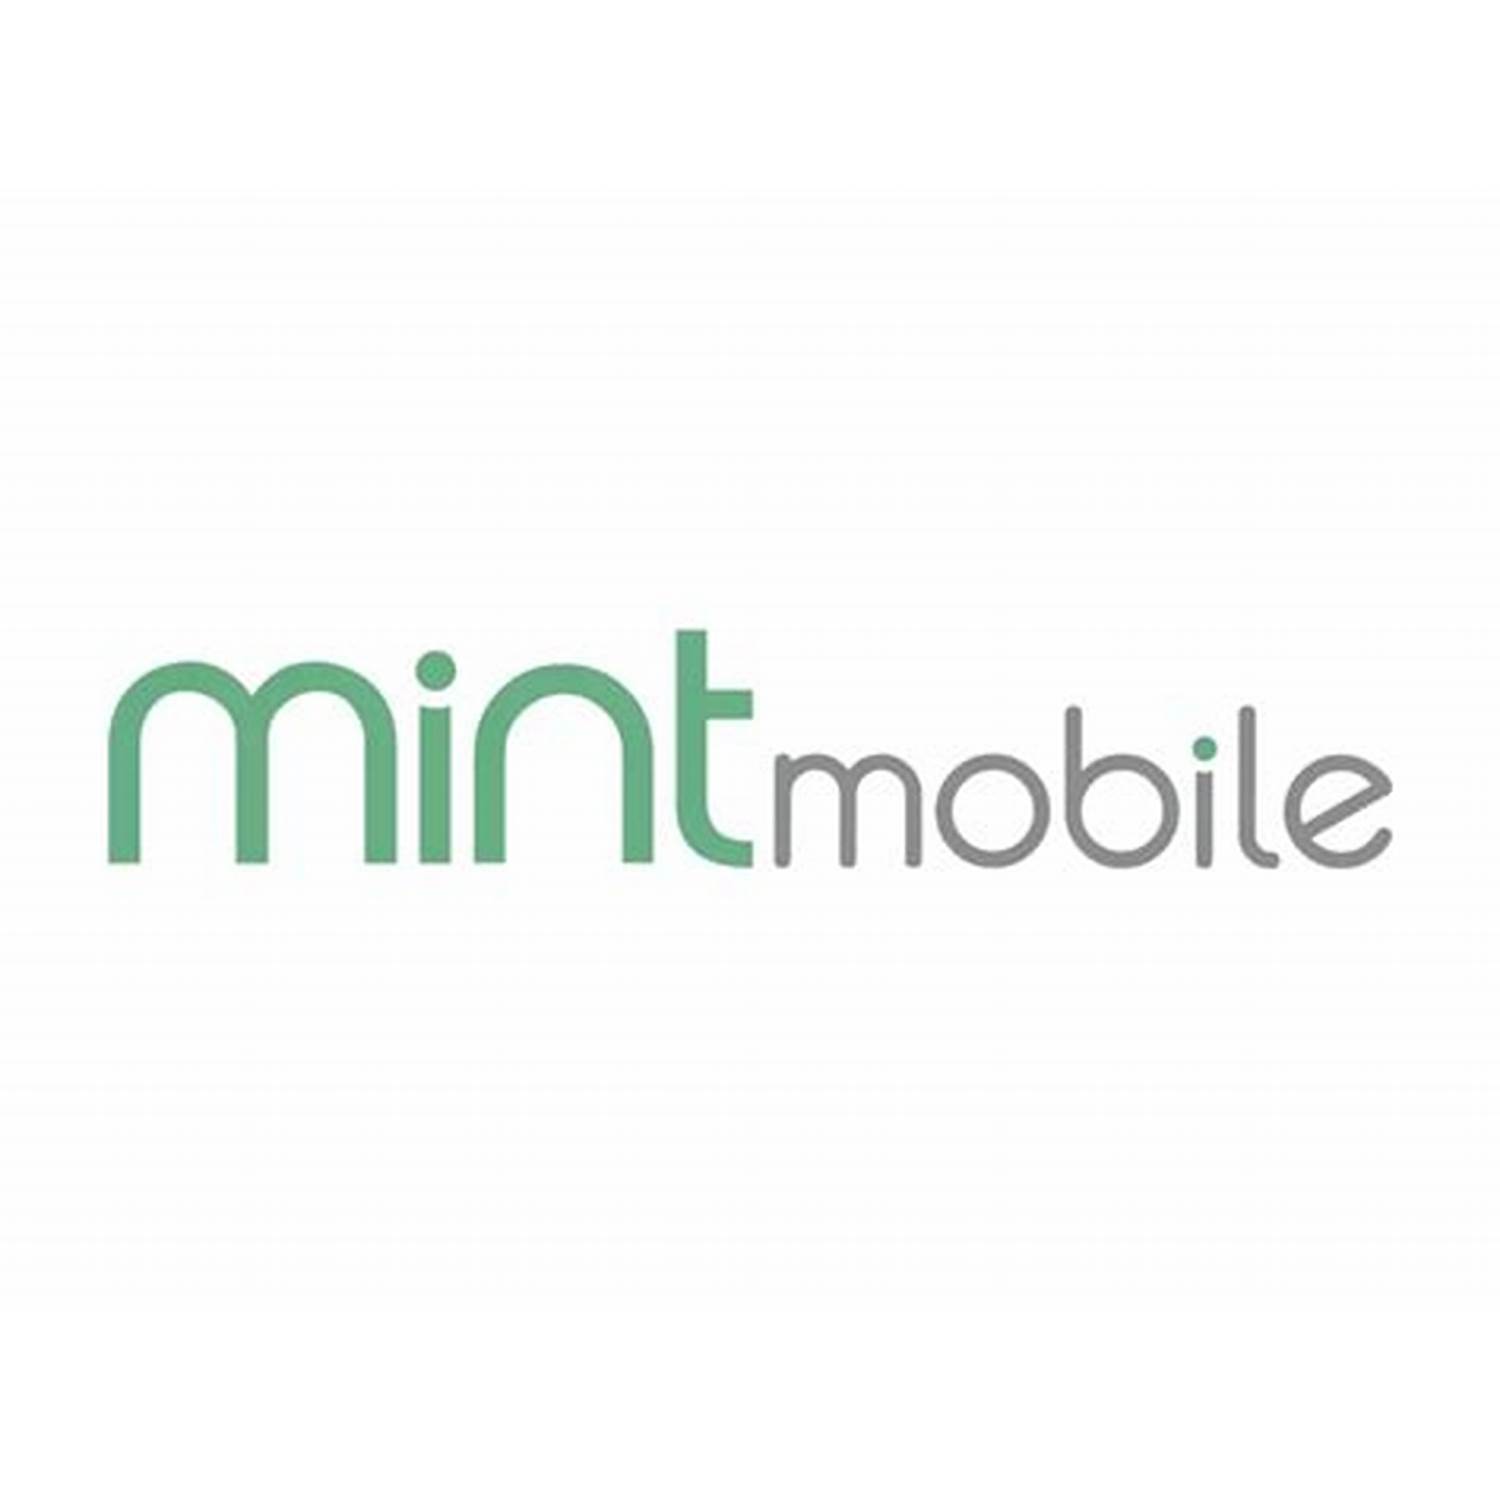 Mint Mobile Logo